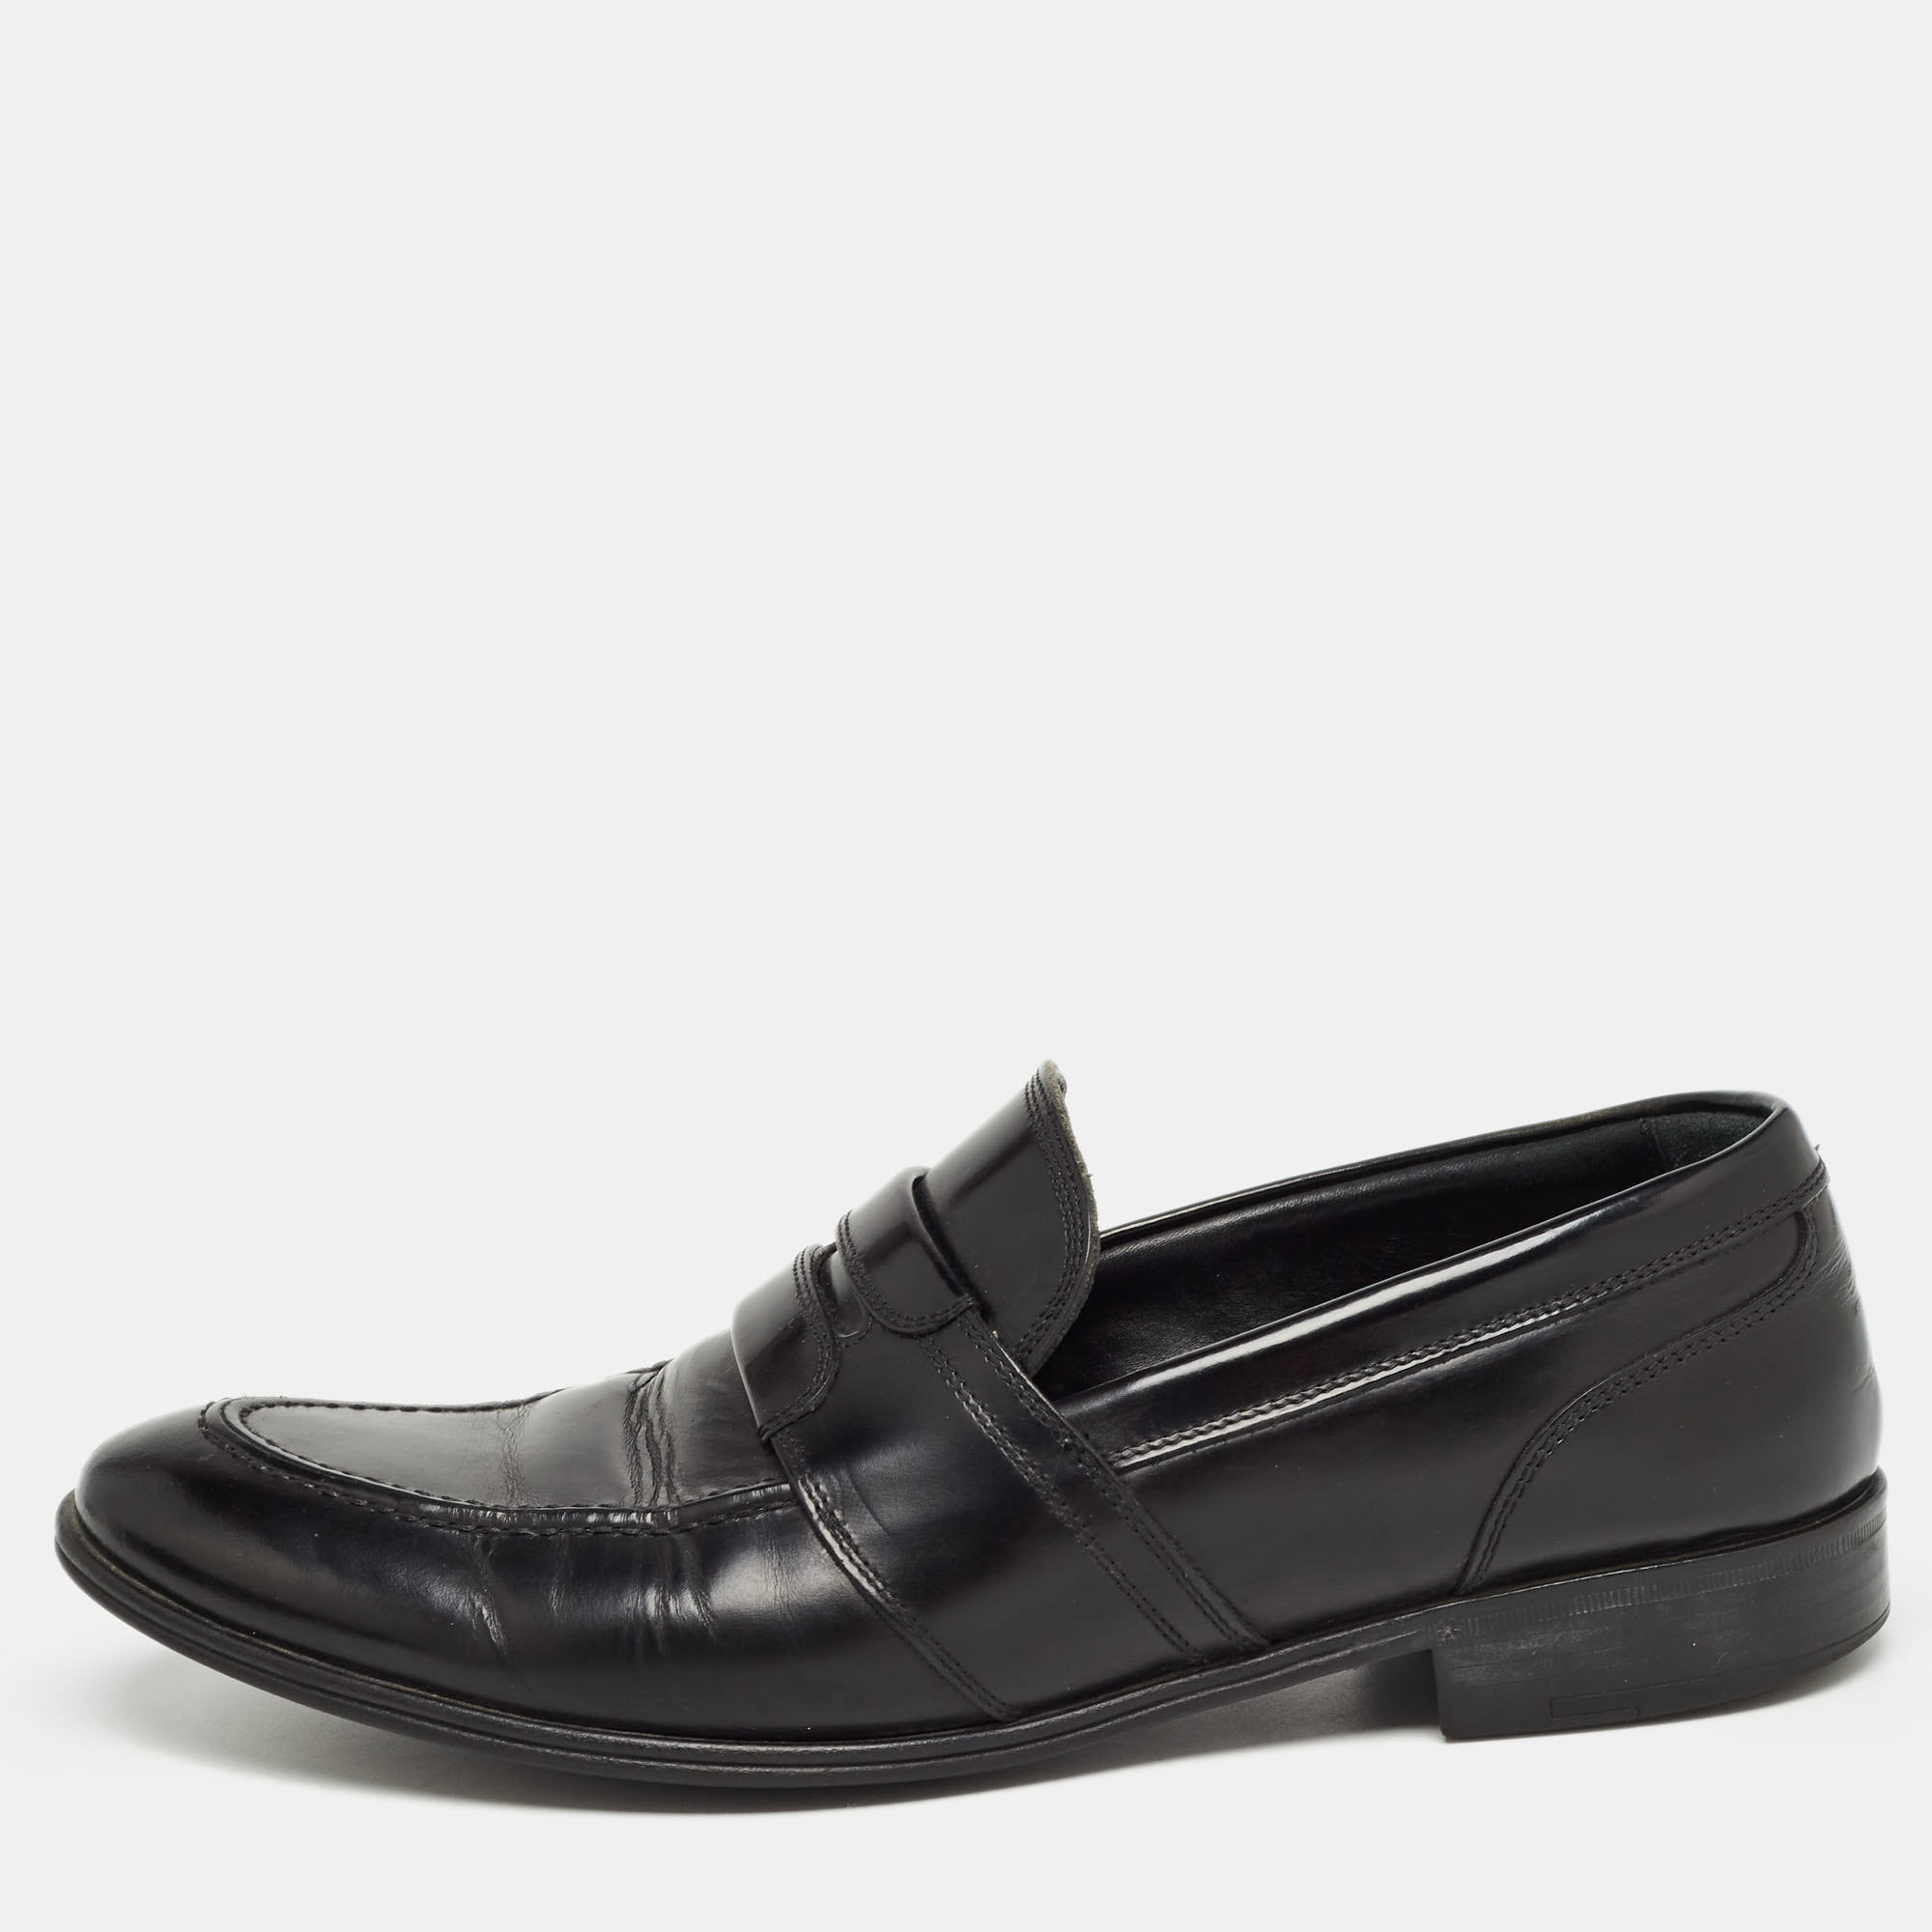 Dolce & gabbana black leather slip on loafers size 40.5